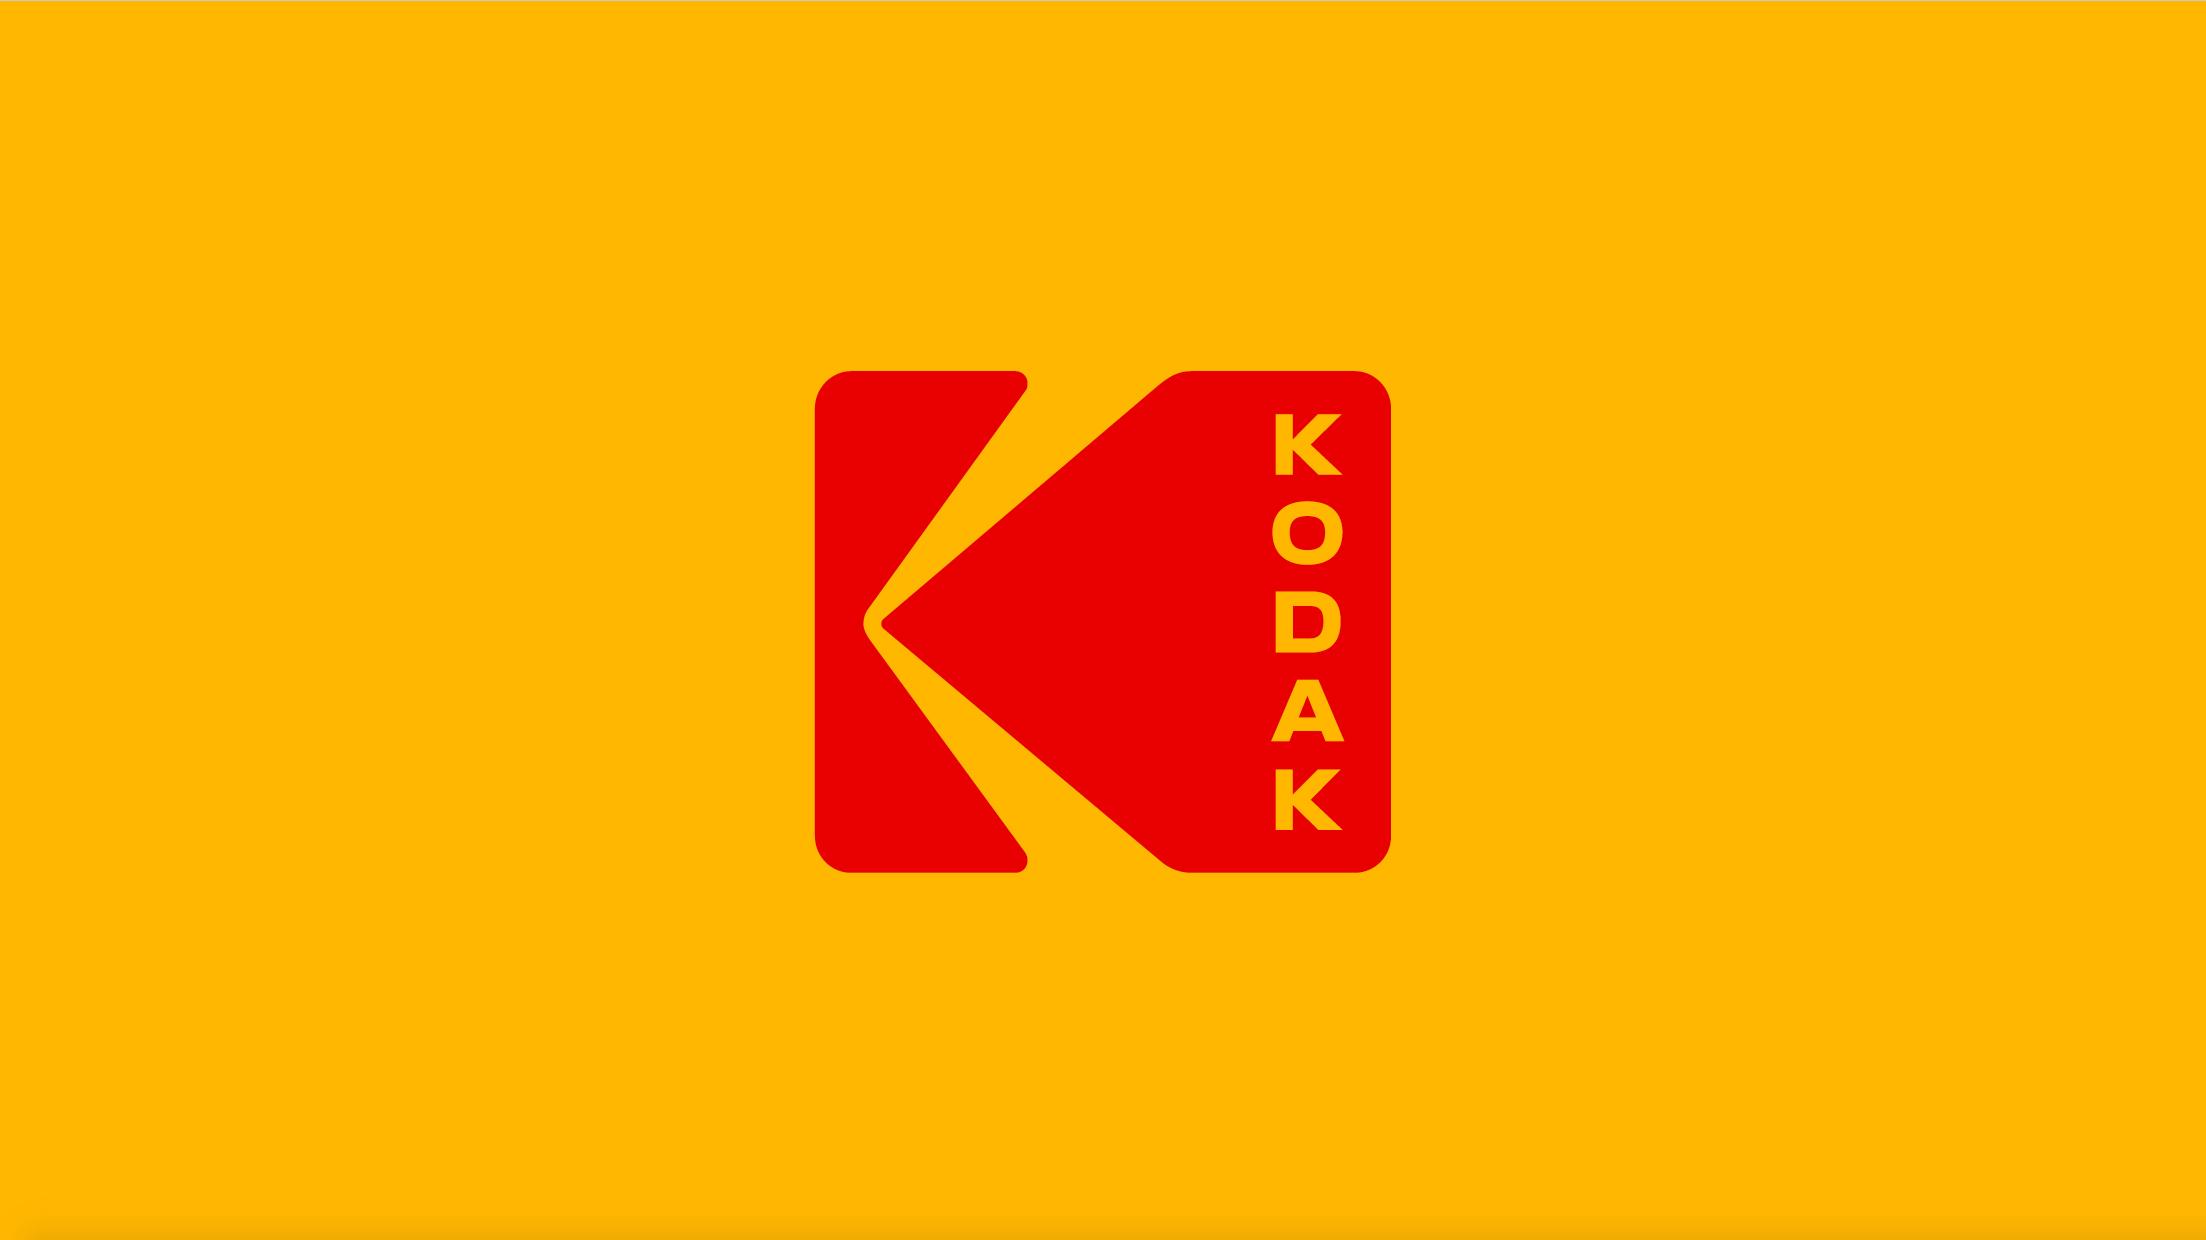 Big Red K Logo - Kodak brings back the big 'K' logo